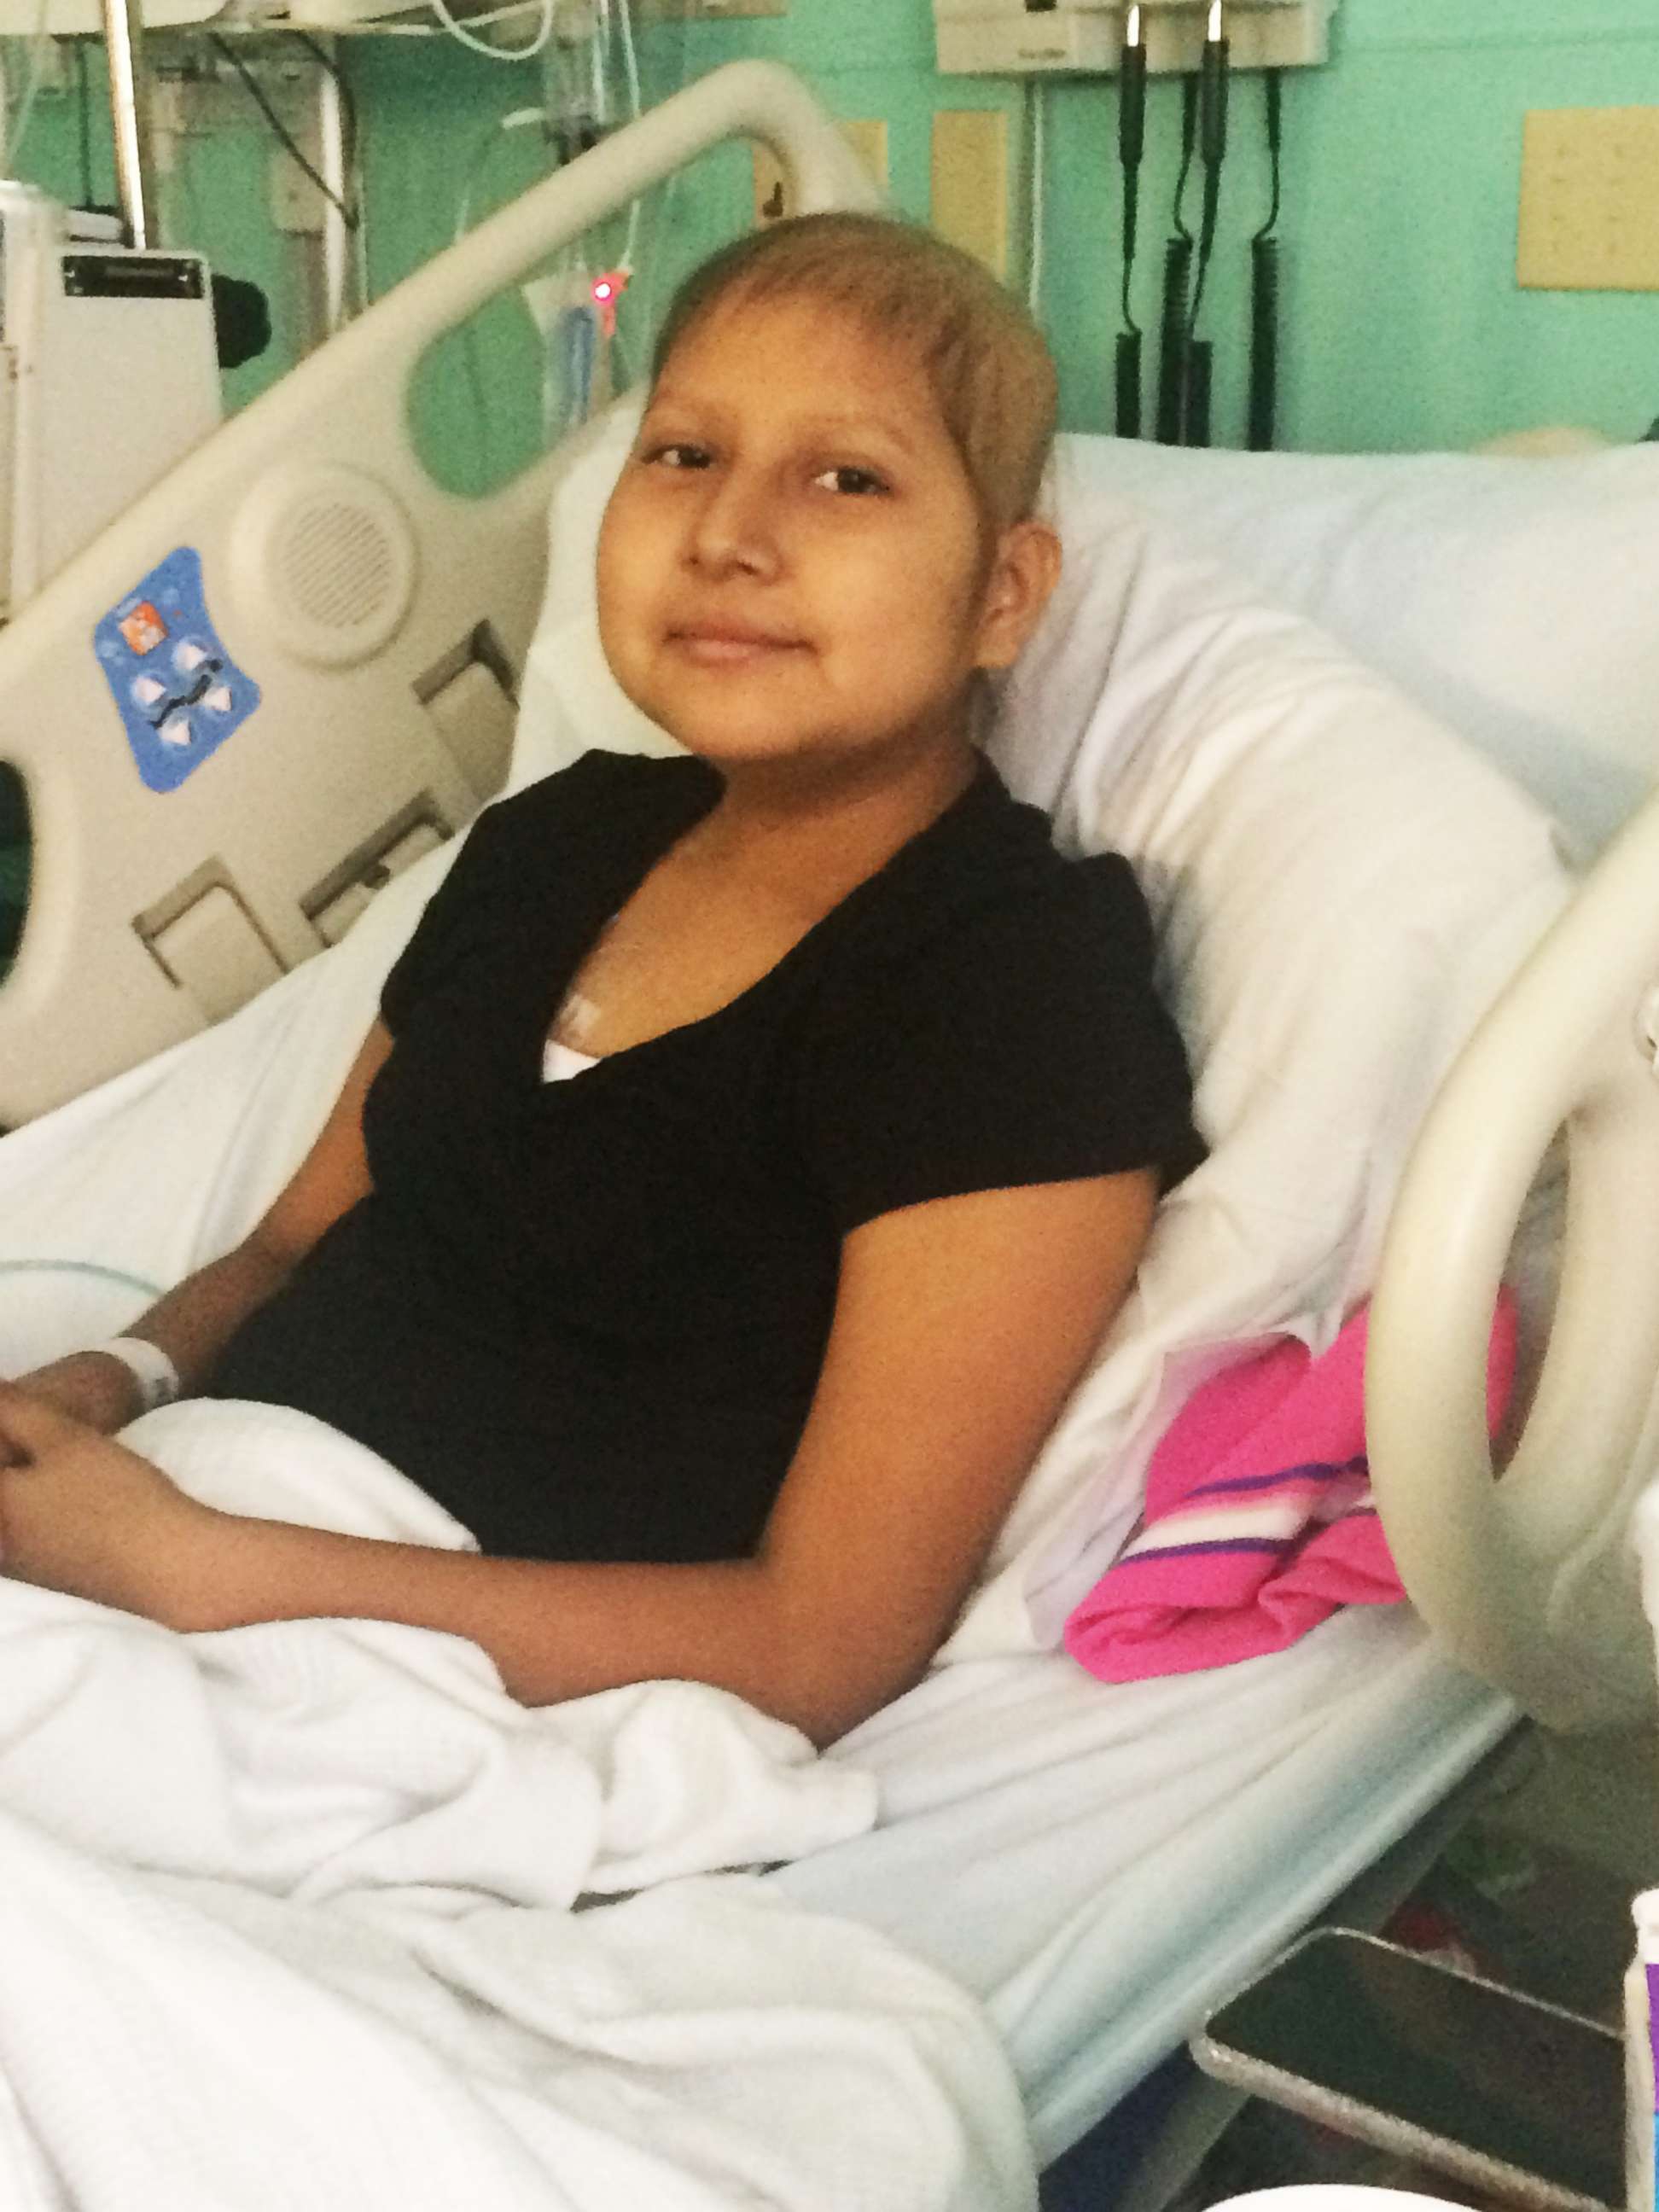 PHOTO: Ixcell Perez, 14, is being treated for leukemia at Duke University Hospital in North Carolina.